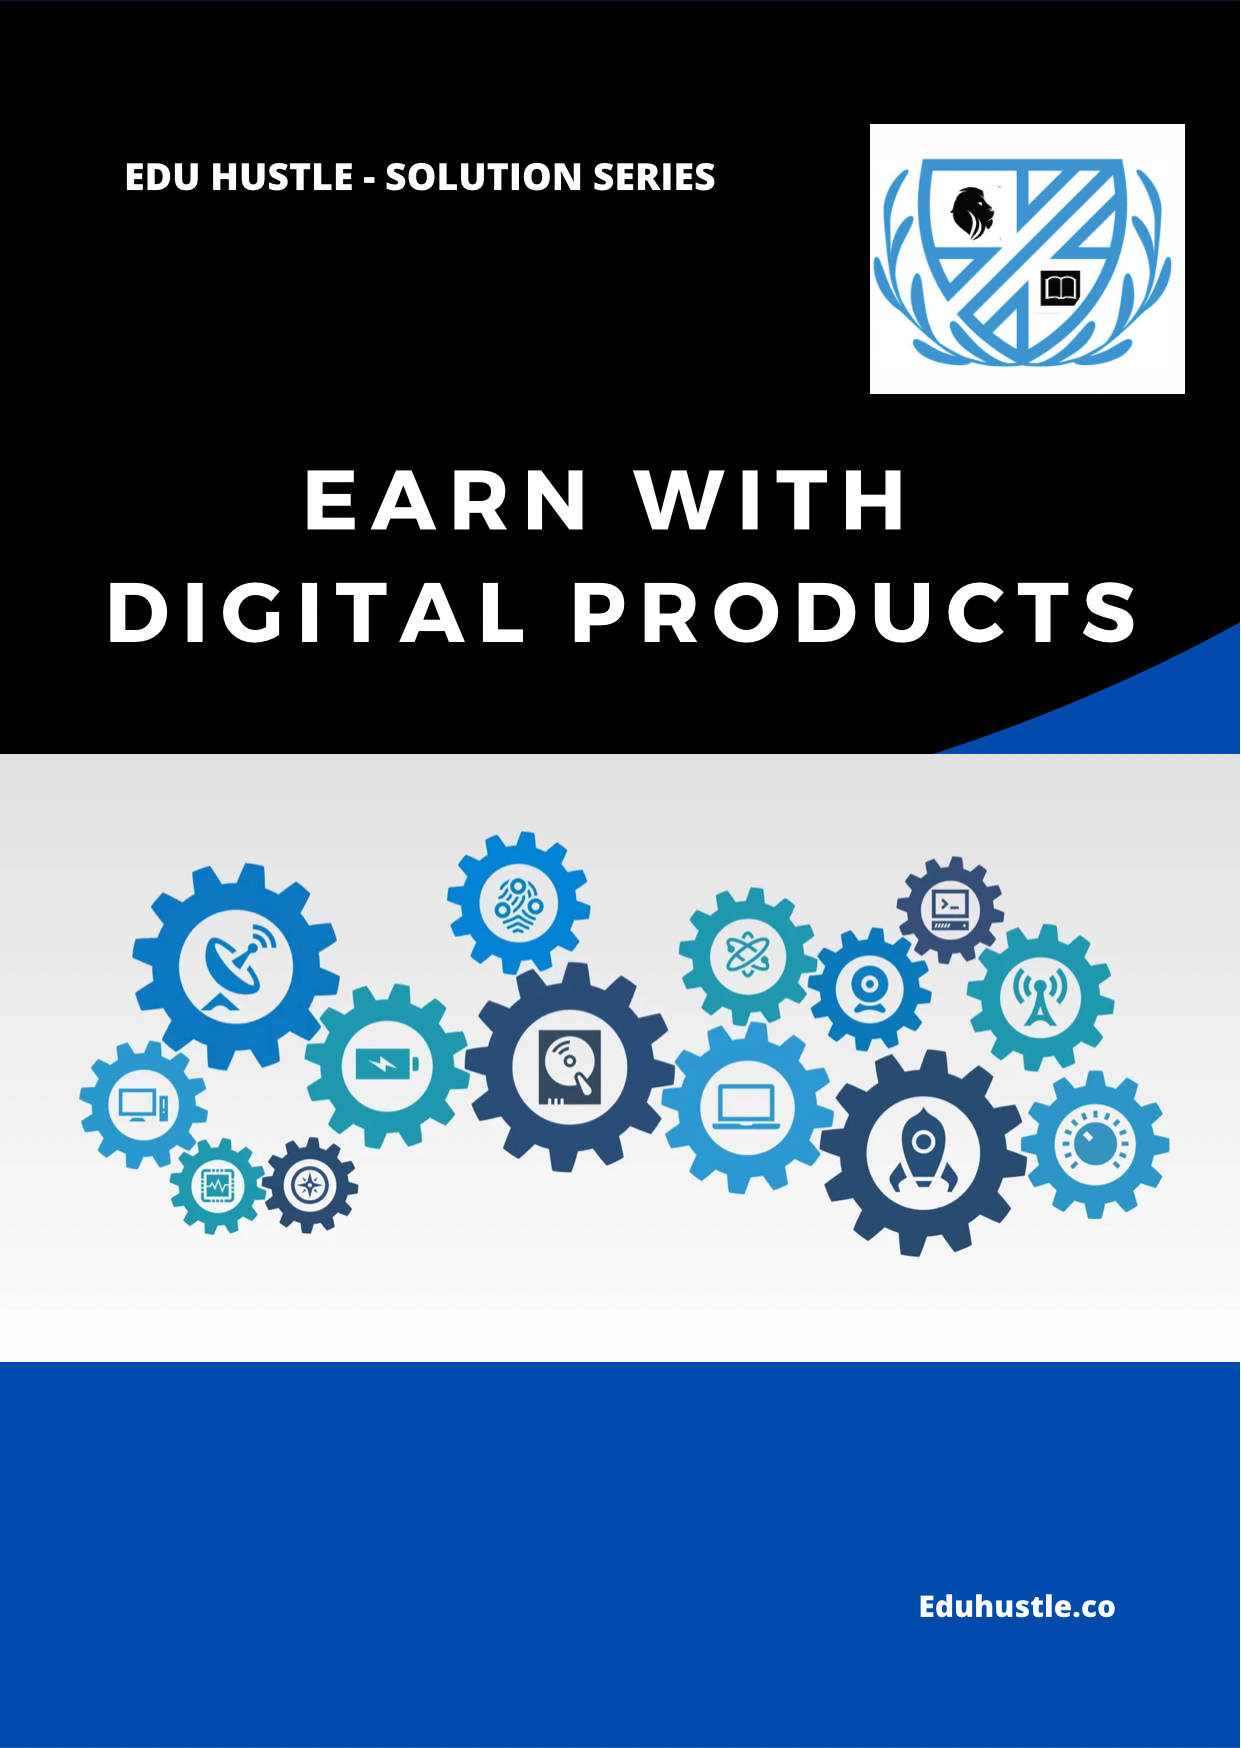 Earn with Digital Products - EDU HUSTLE